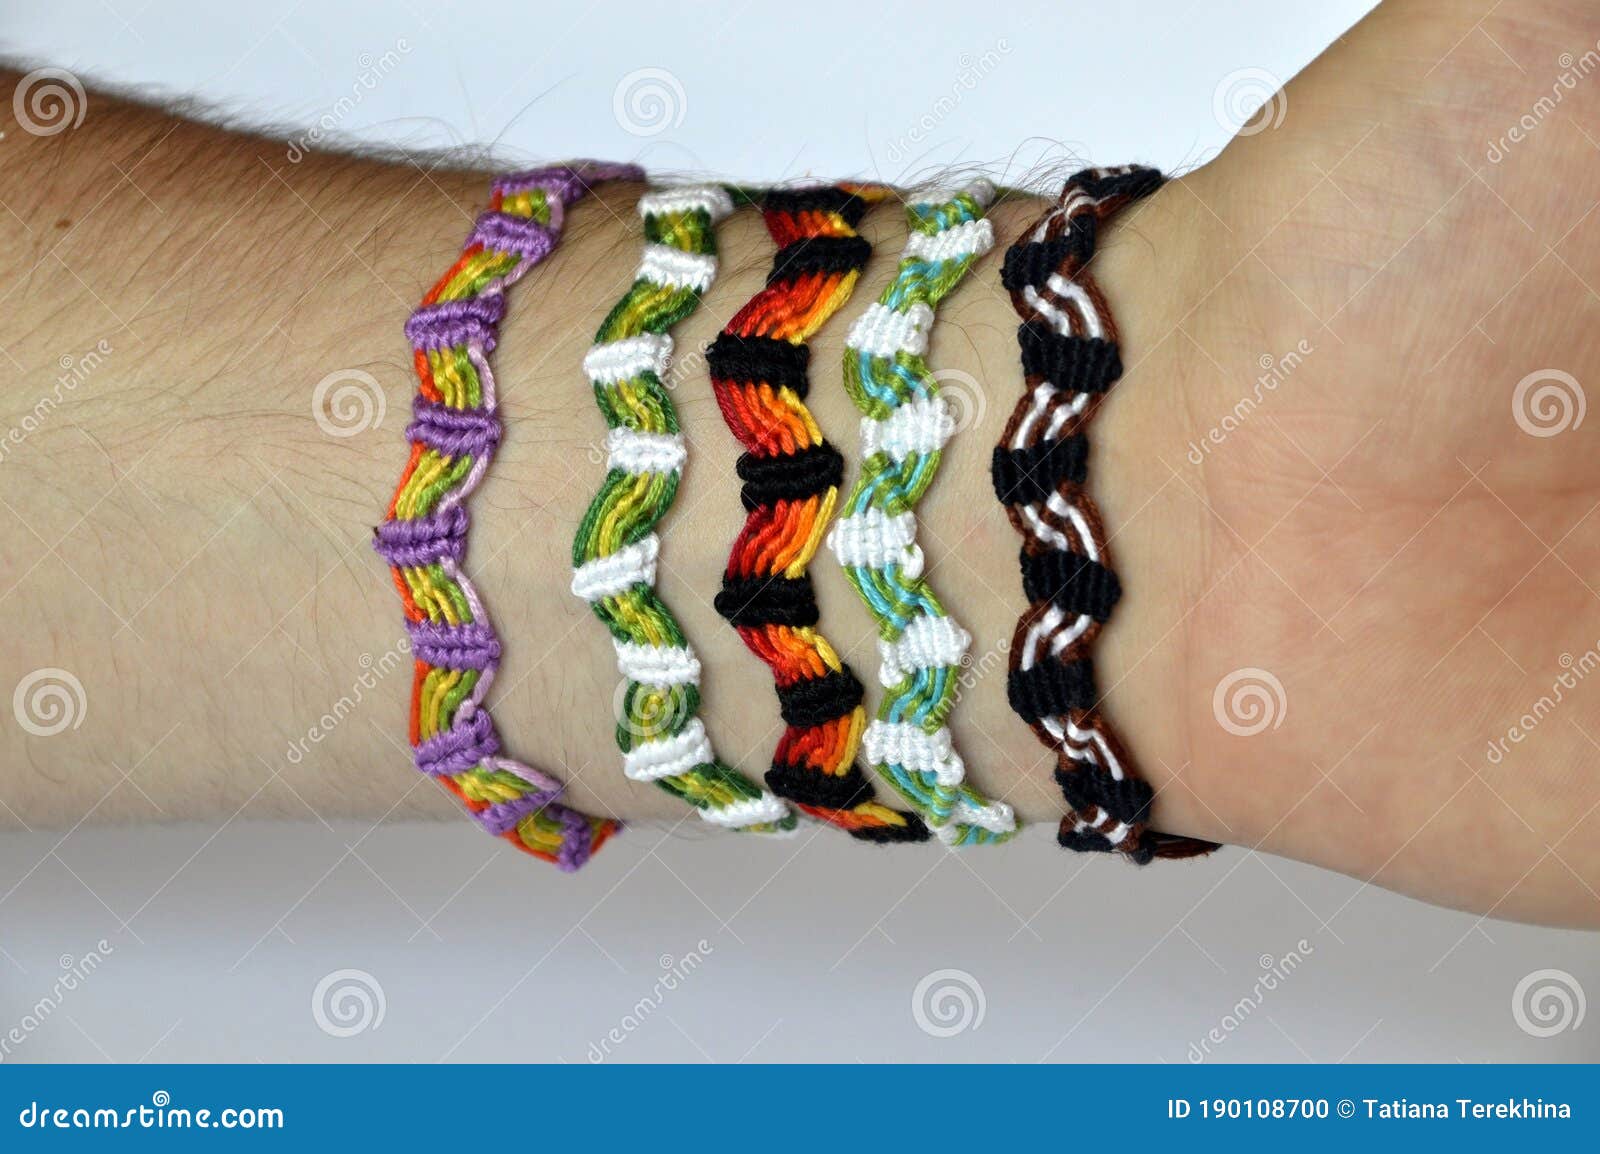 DIY easy Yin and Yang couple bracelets | Macrame Couple bracelets | St.  Valentine's gift ideas - YouTube